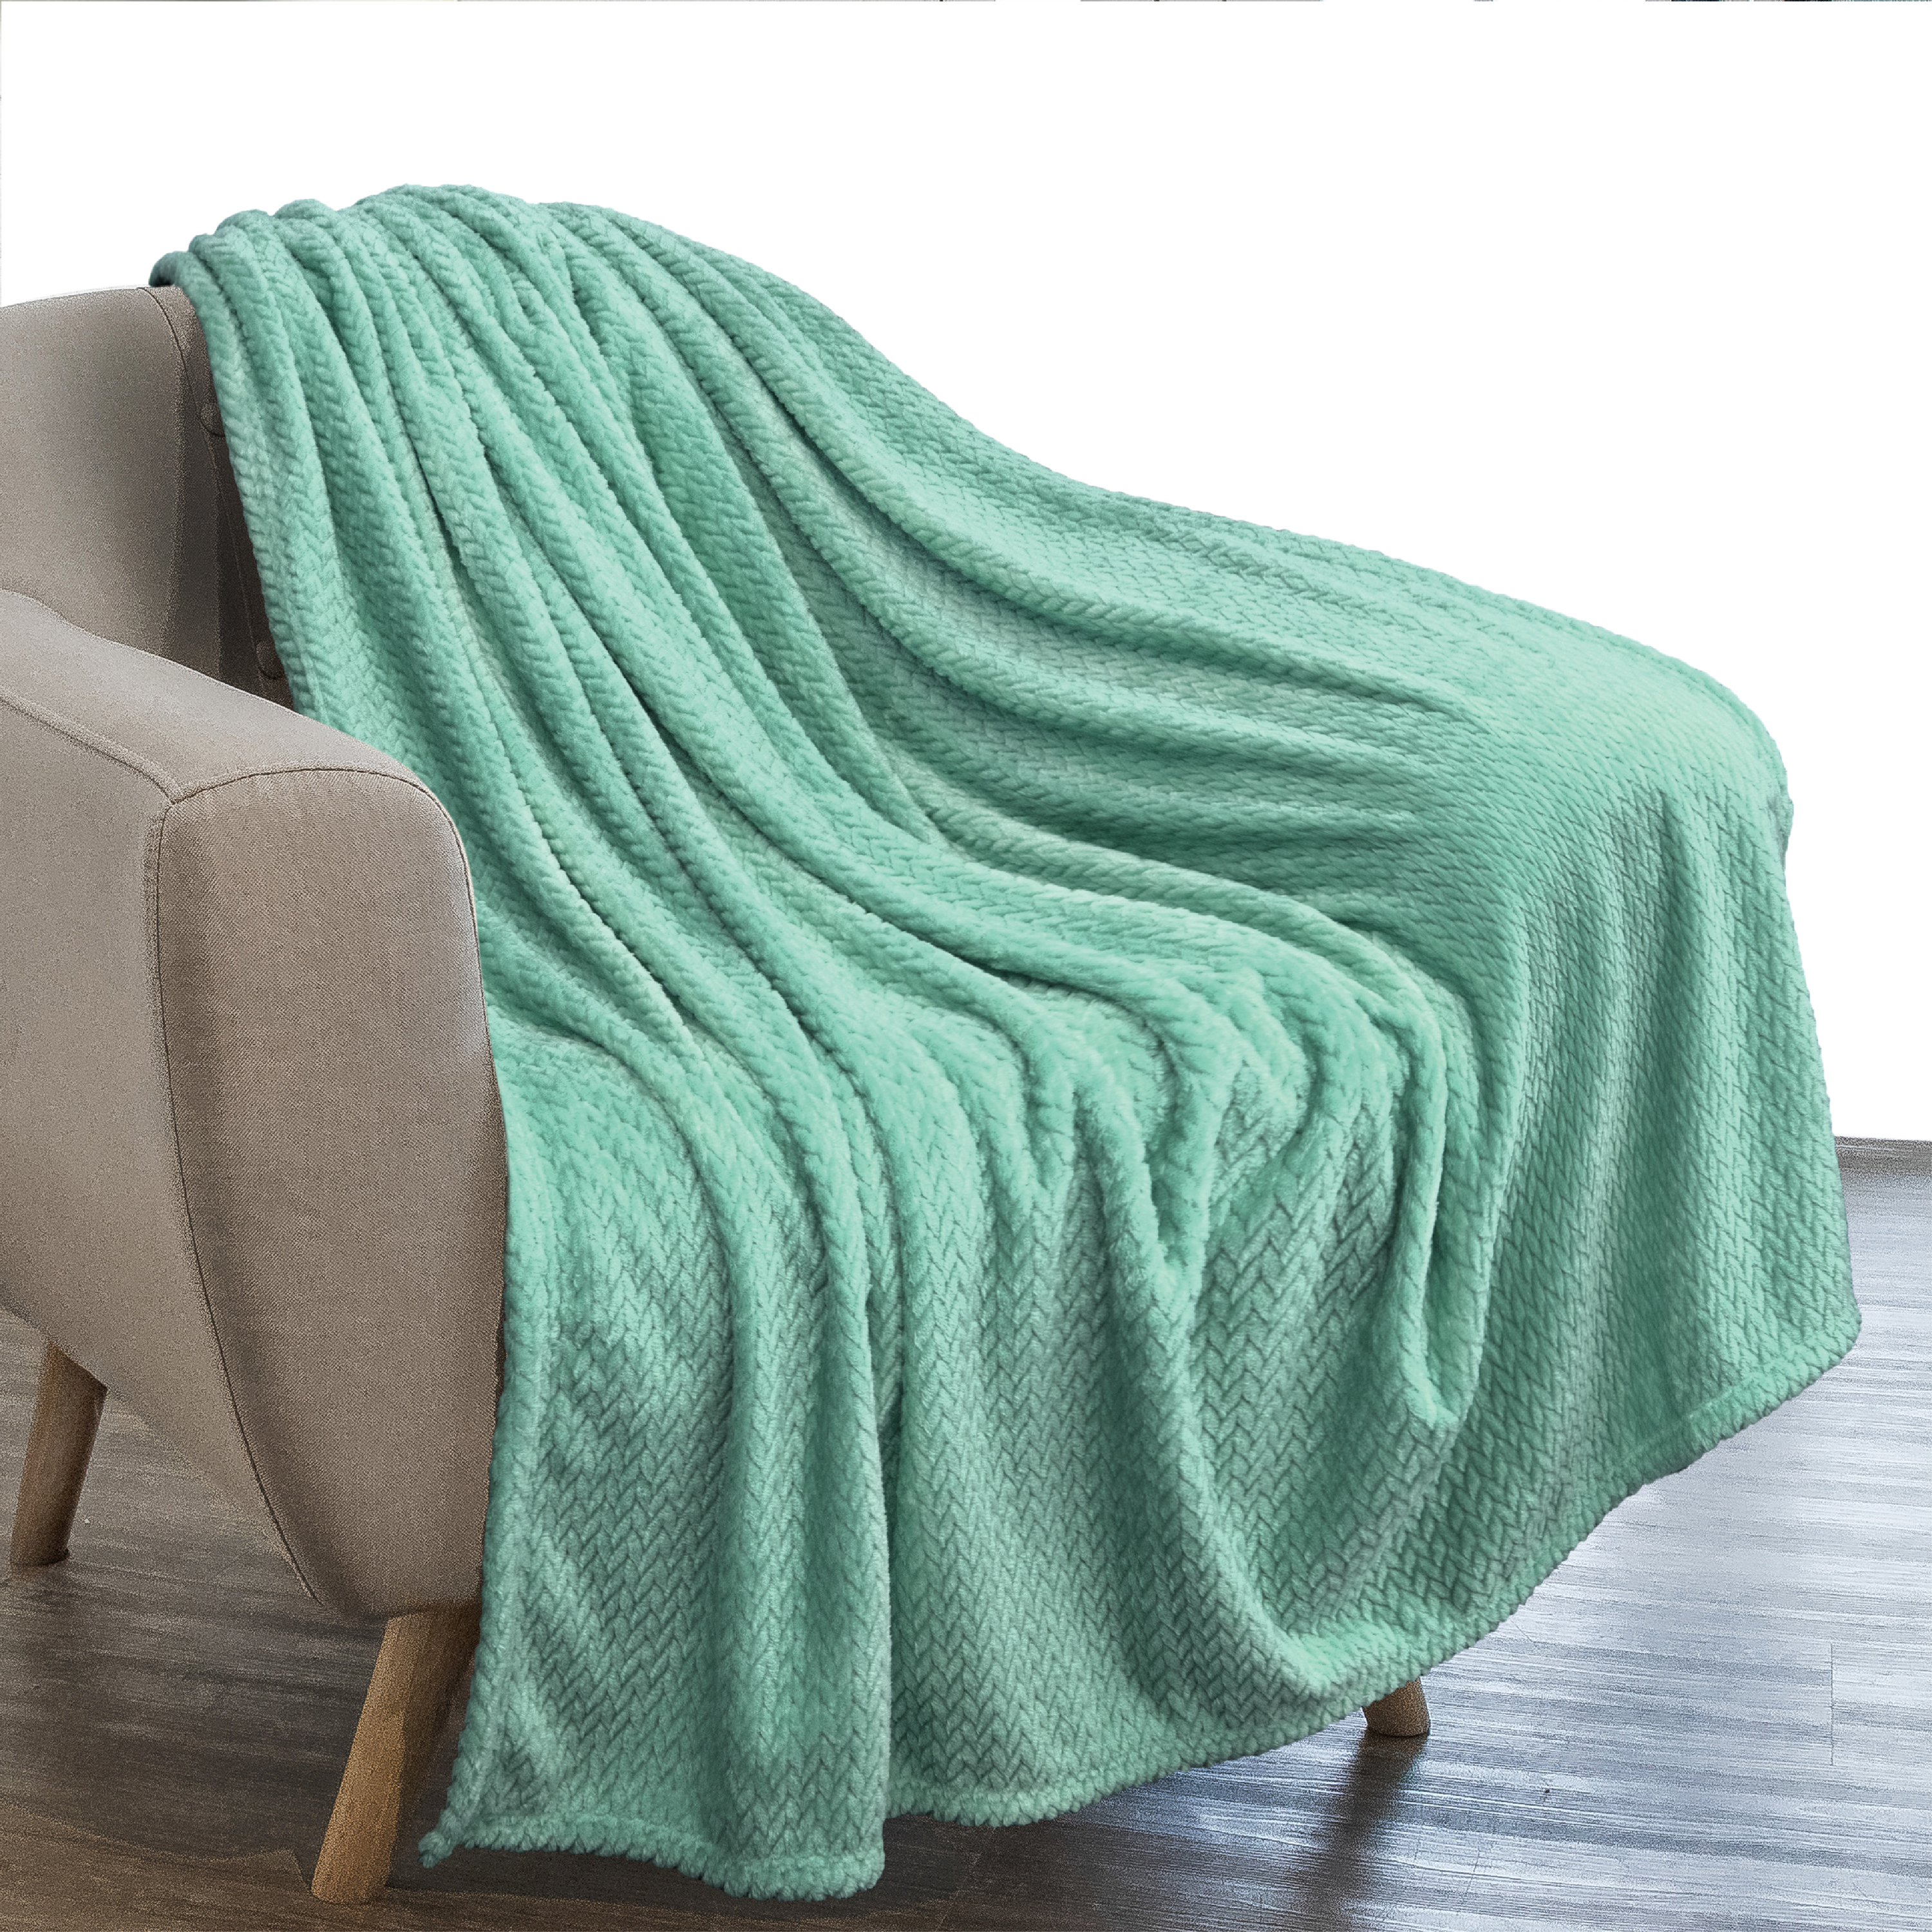 PAVILIA Luxury Flannel Fleece Blanket Throw Teal Mint Green | Soft ...